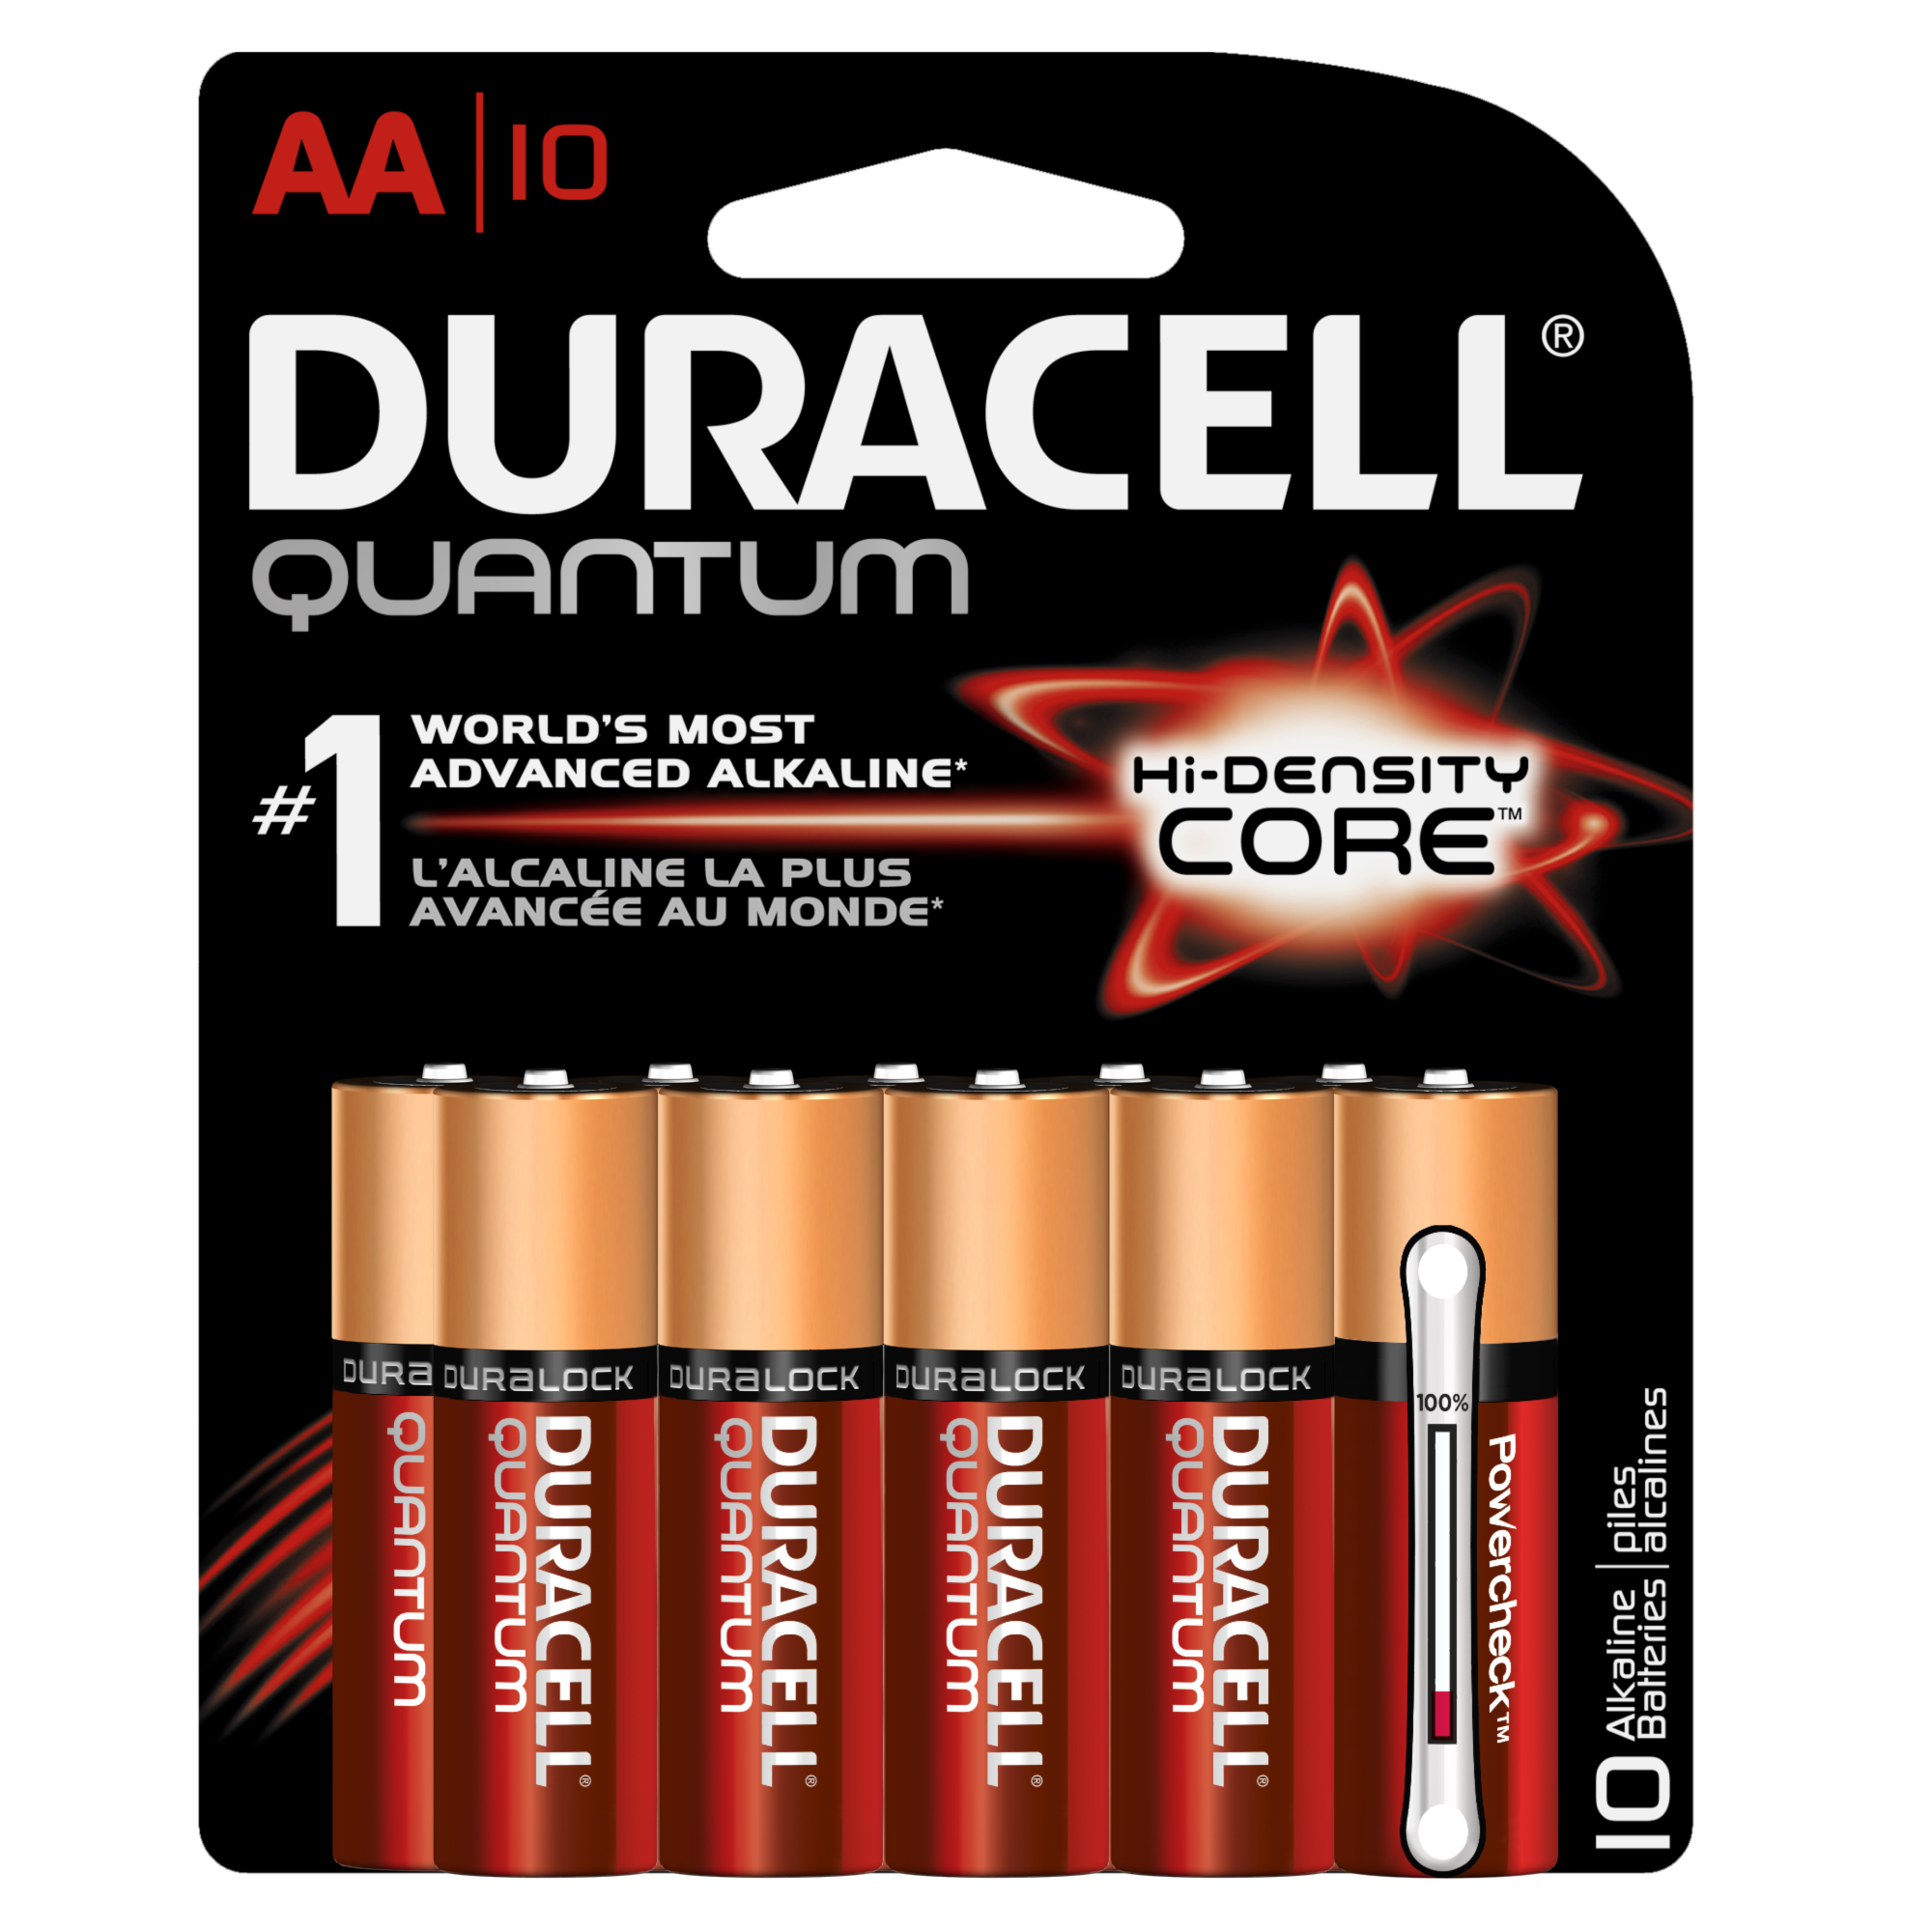 Duracell Quantum AA Pack Shot